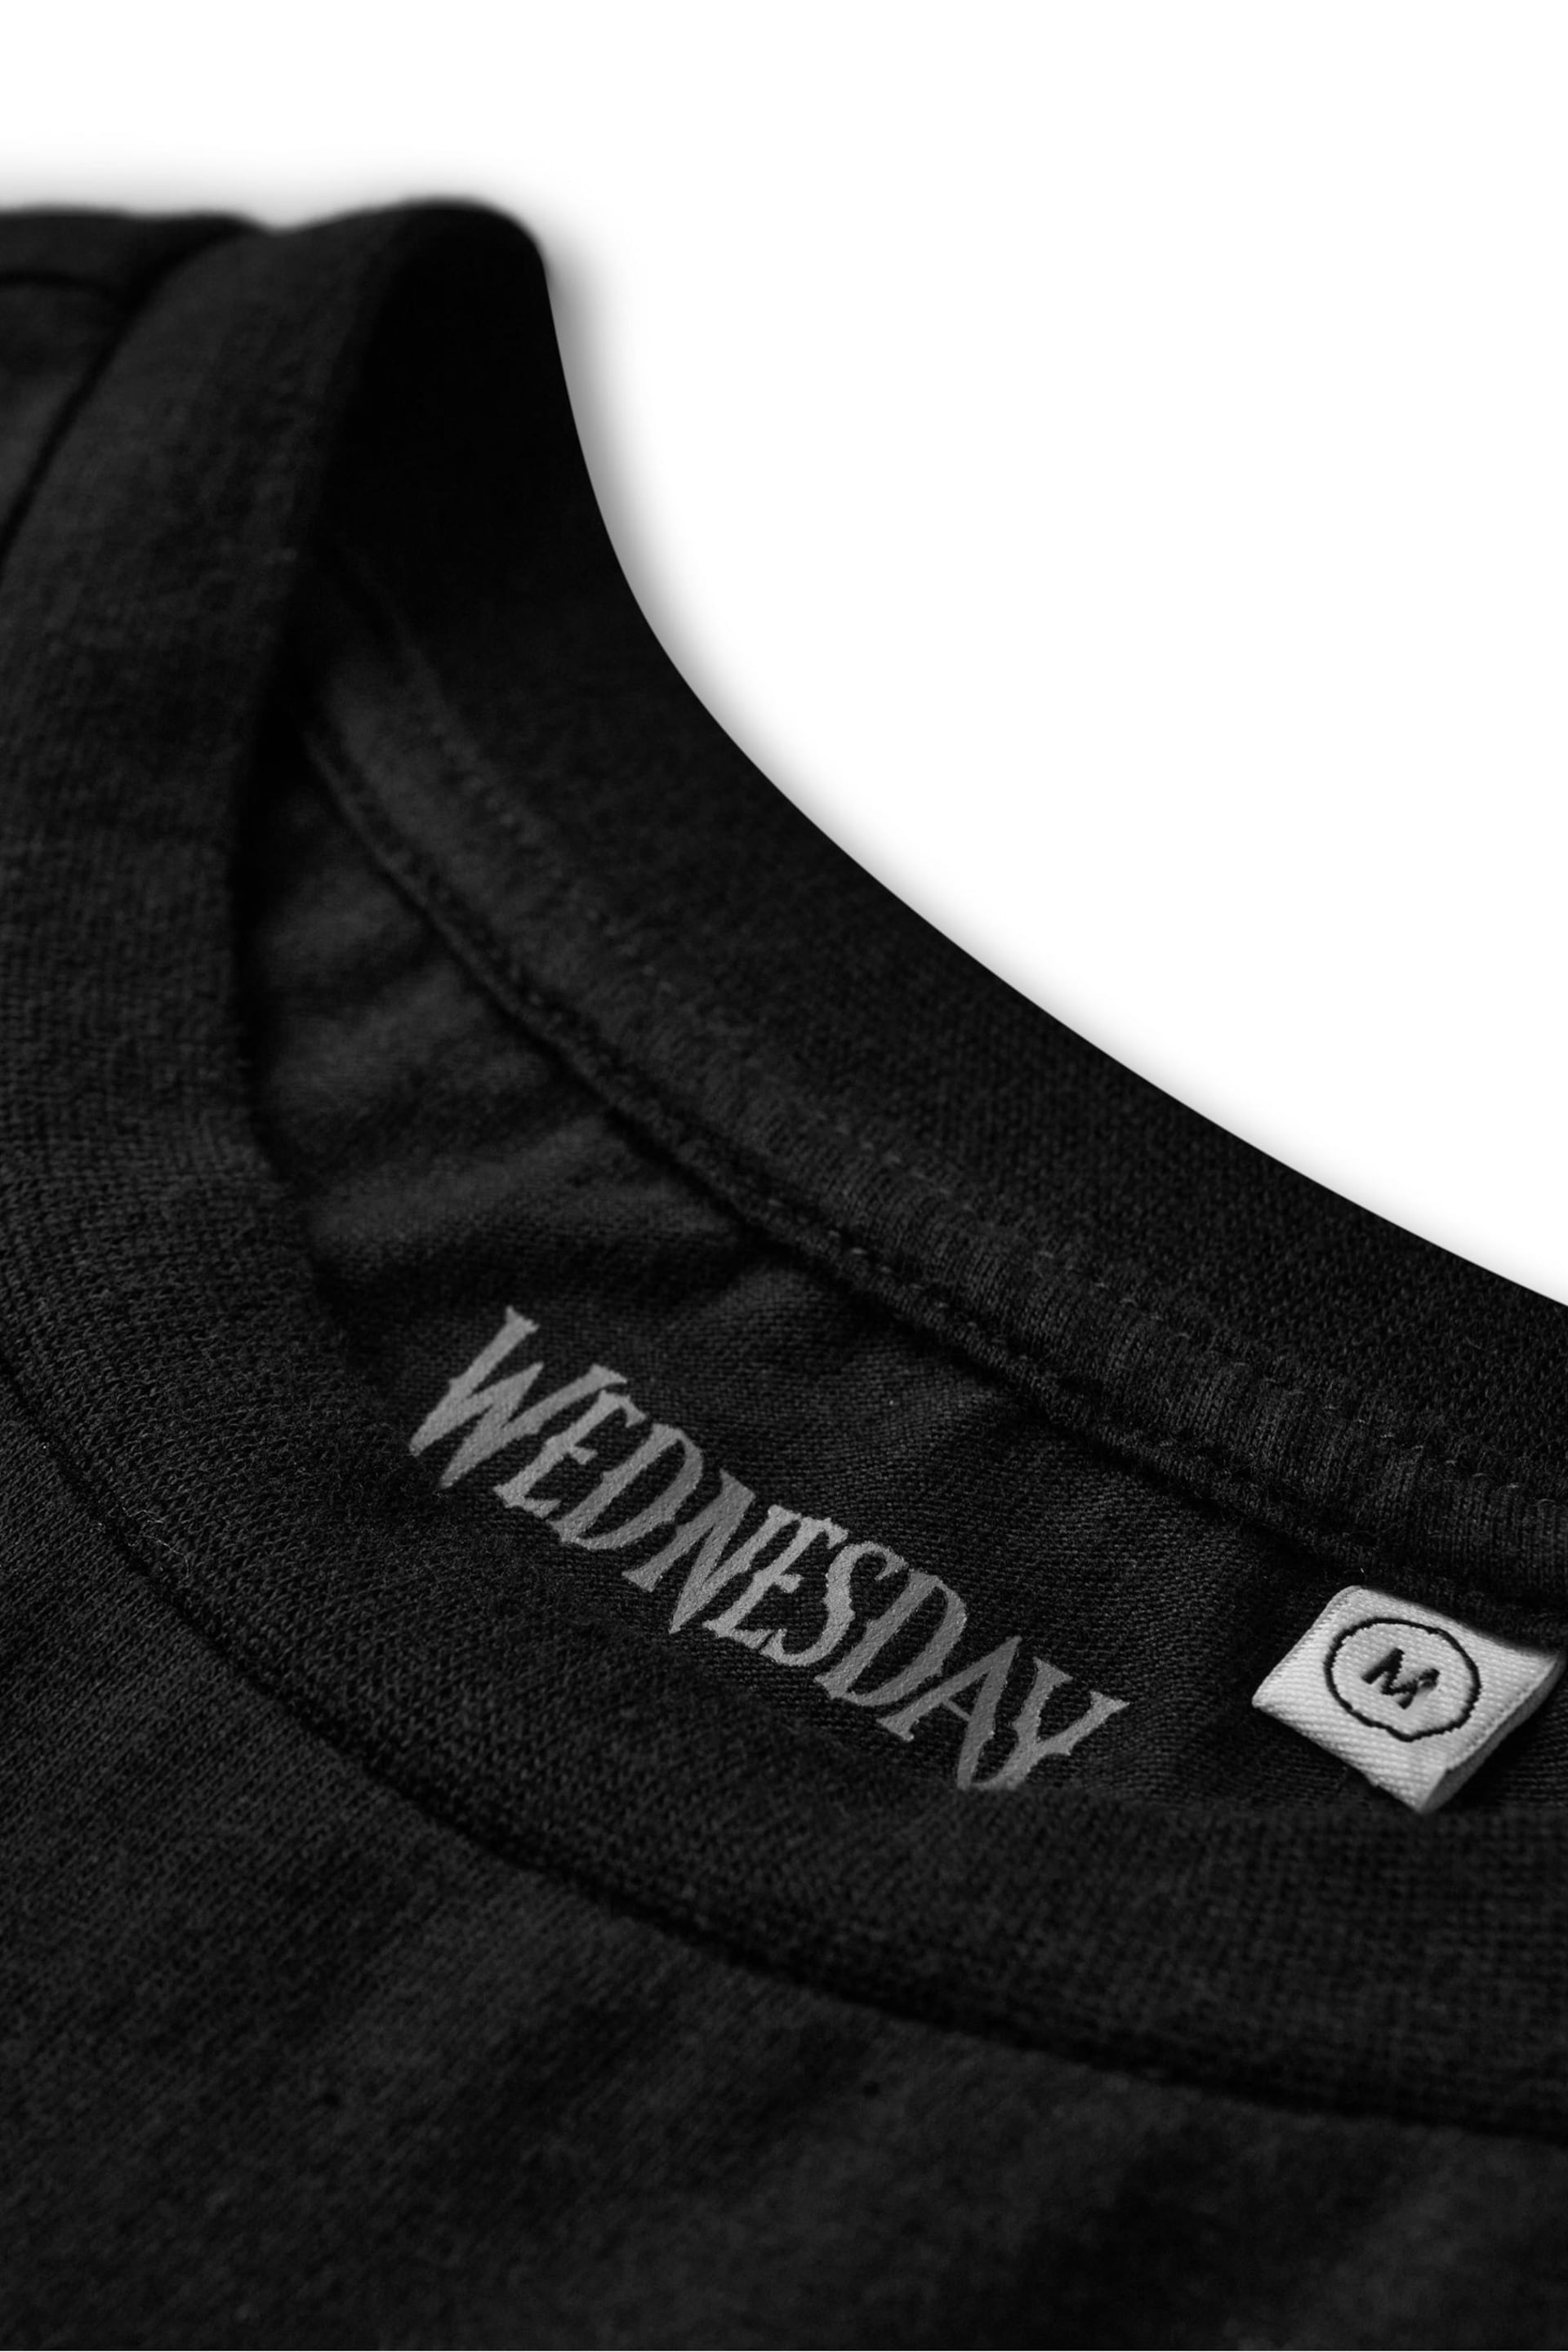 Vanilla Underground Black Wednesday Ladies Licensing T-Shirt - Image 2 of 4